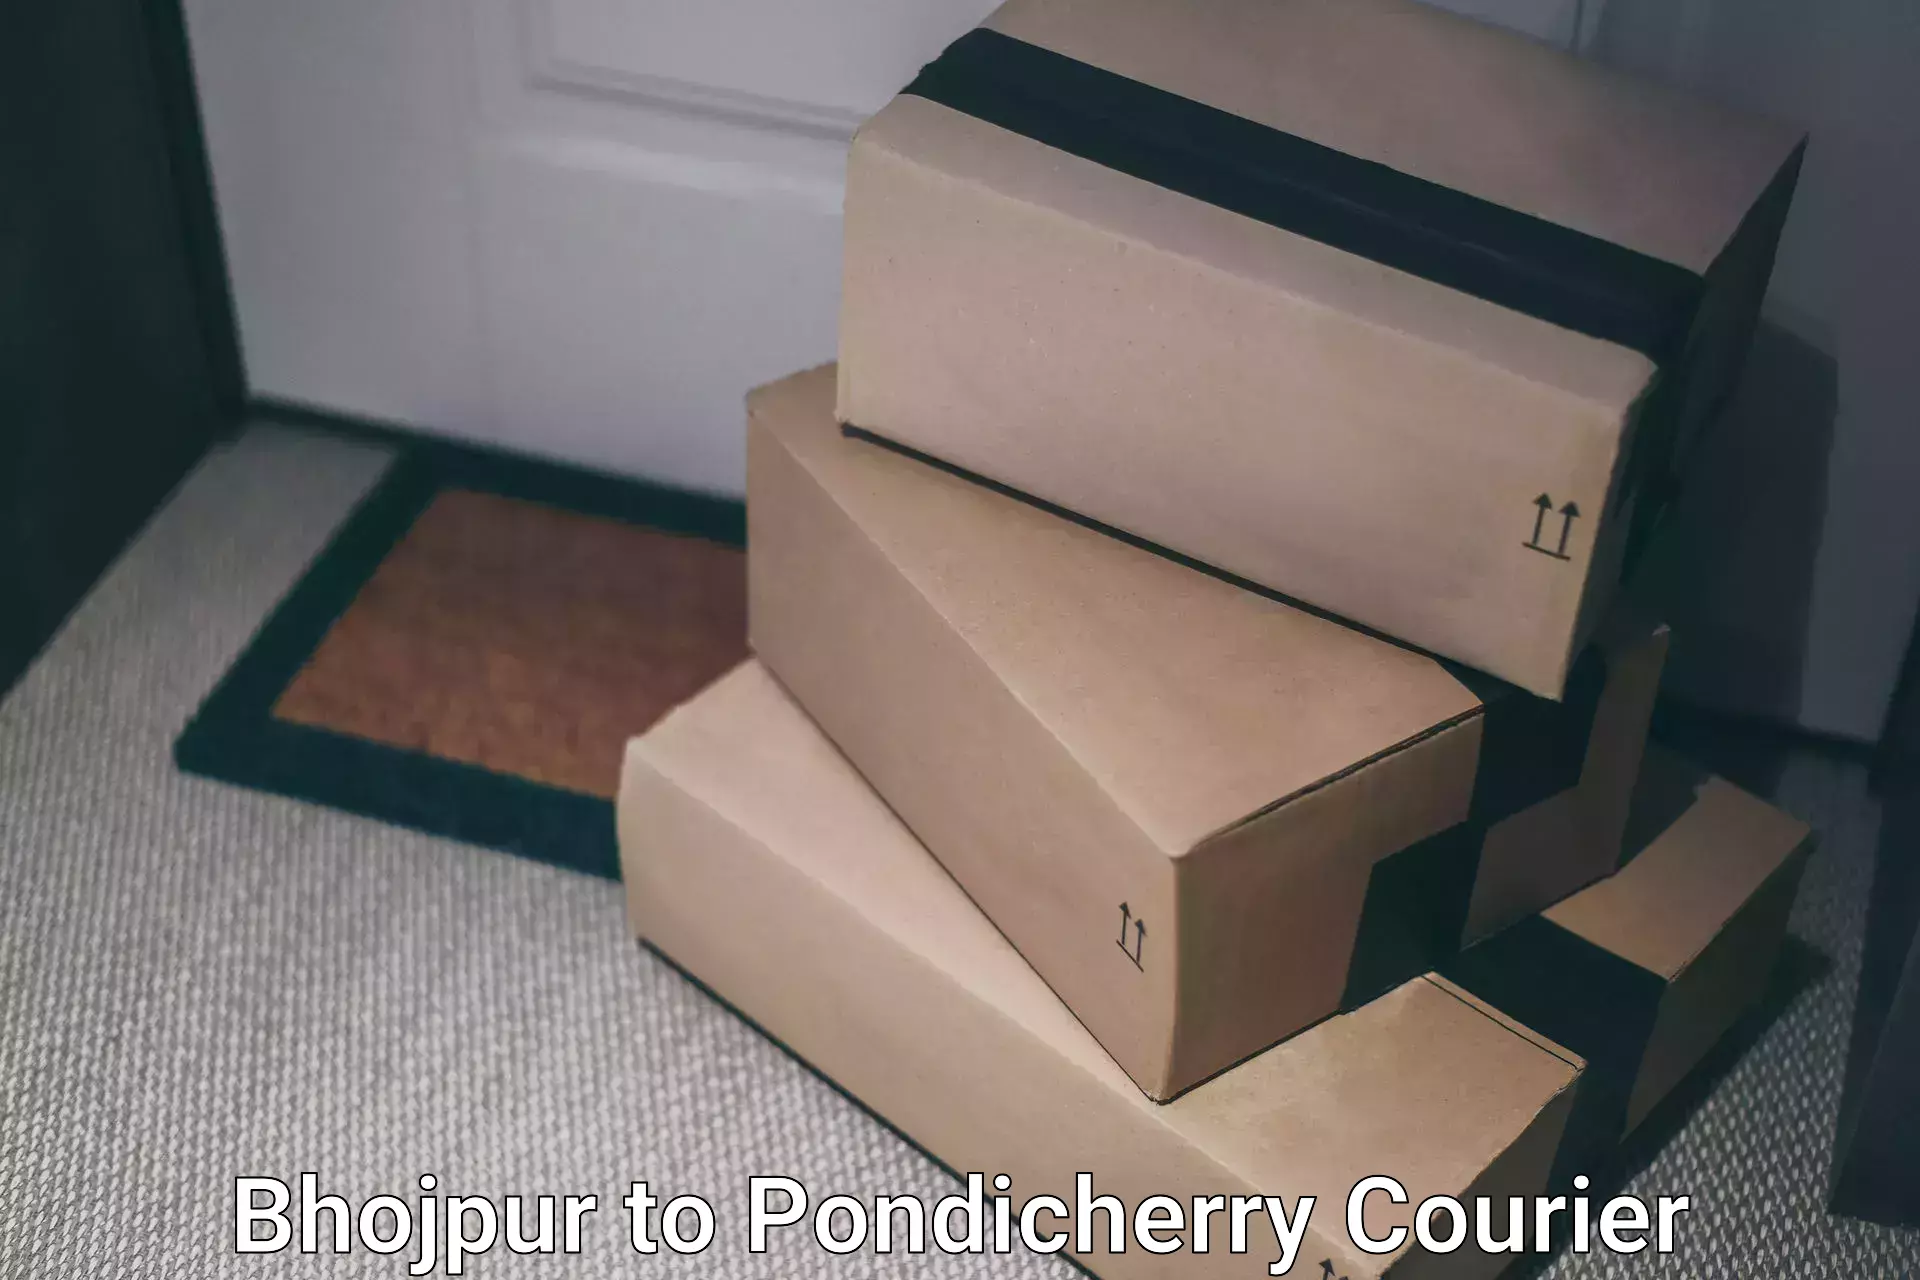 User-friendly delivery service Bhojpur to Pondicherry